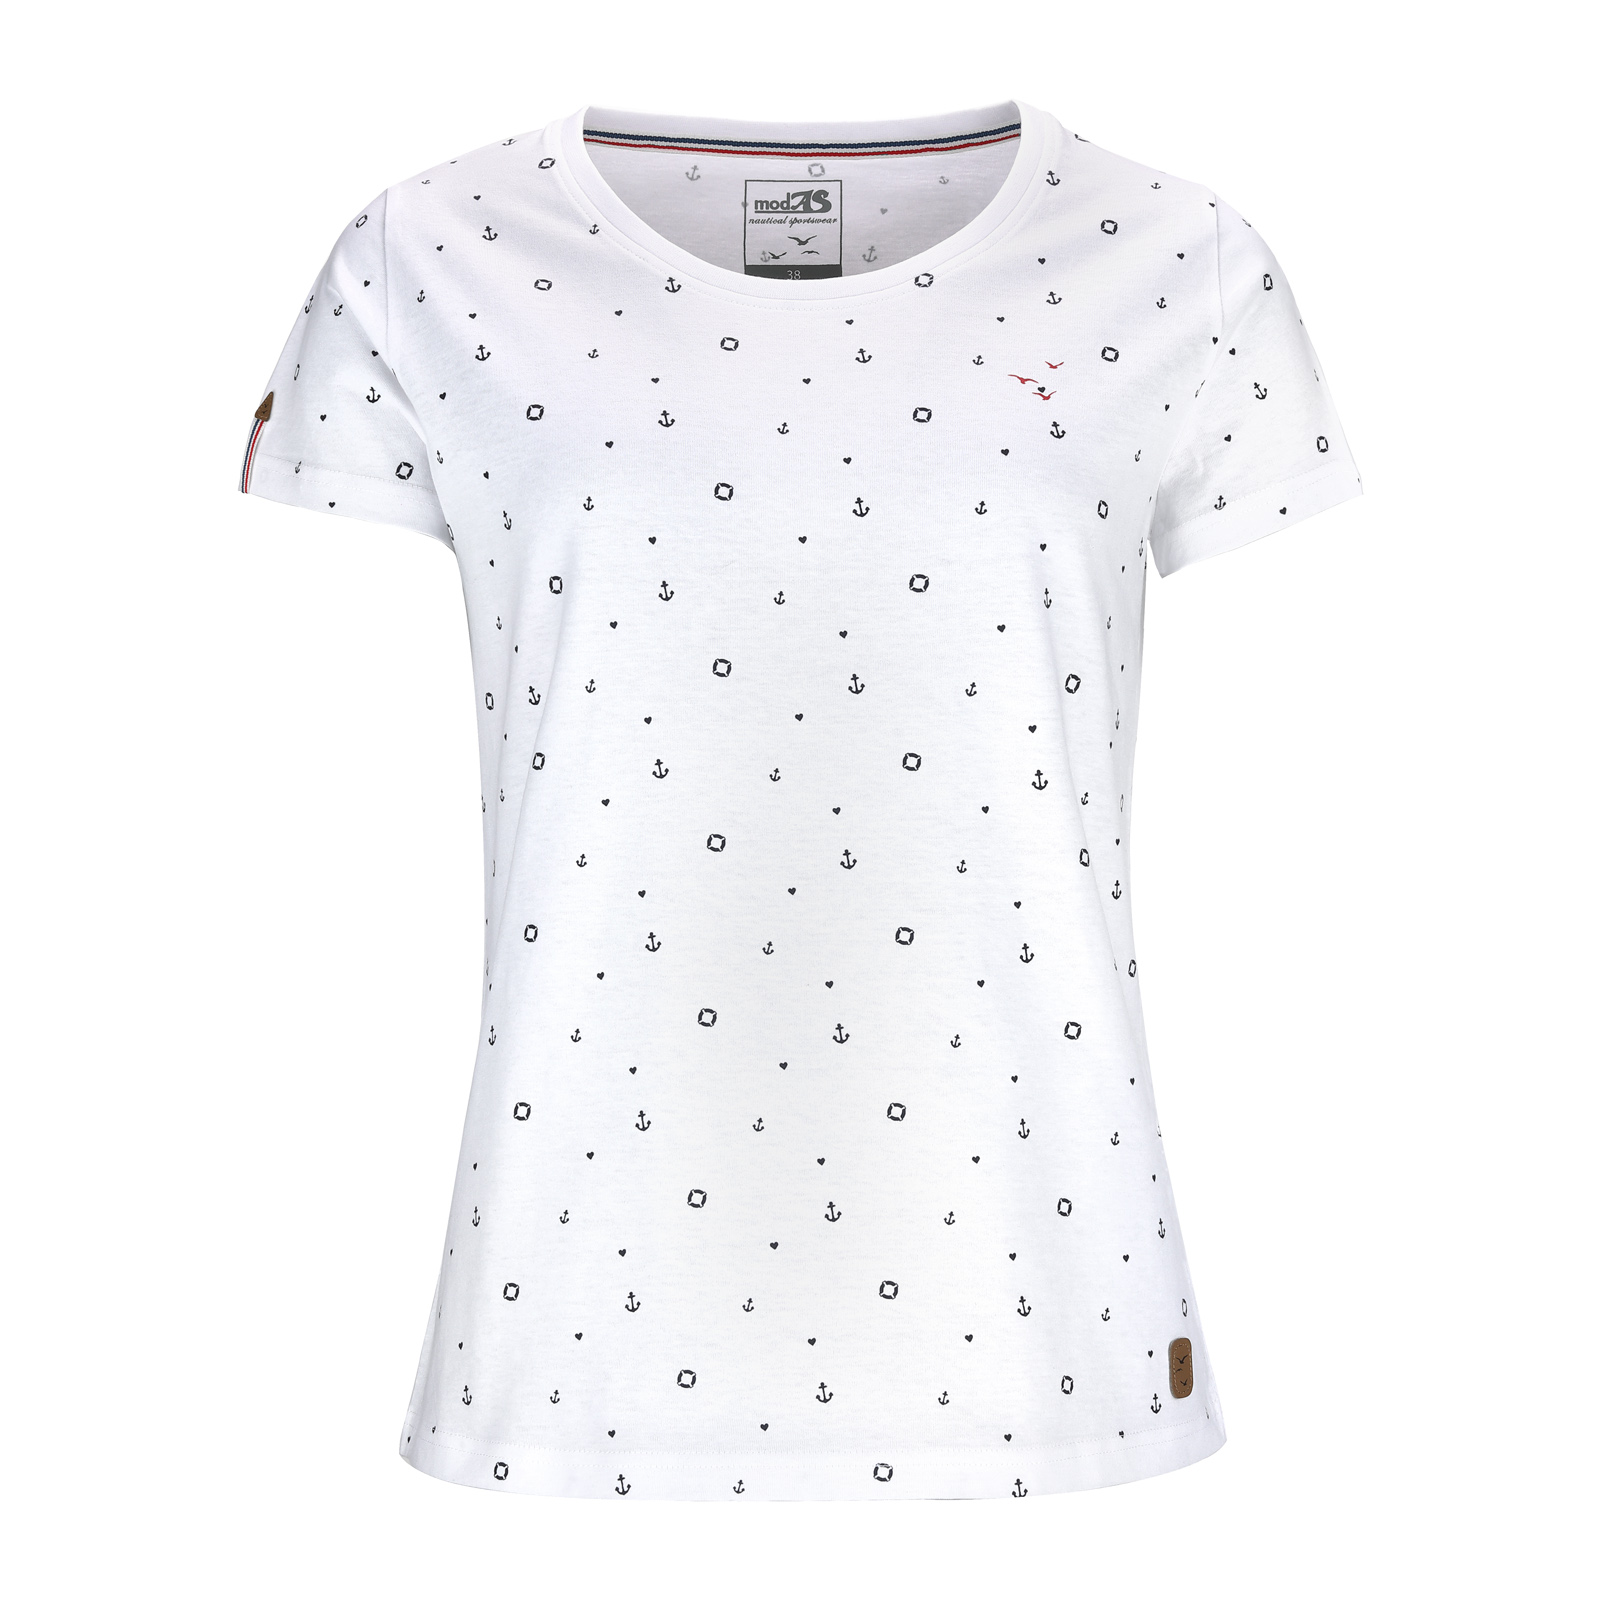 Damen-T-Shirt mit Print | Shirts | Fashion-Kollektion | modAS - Freizeitmode